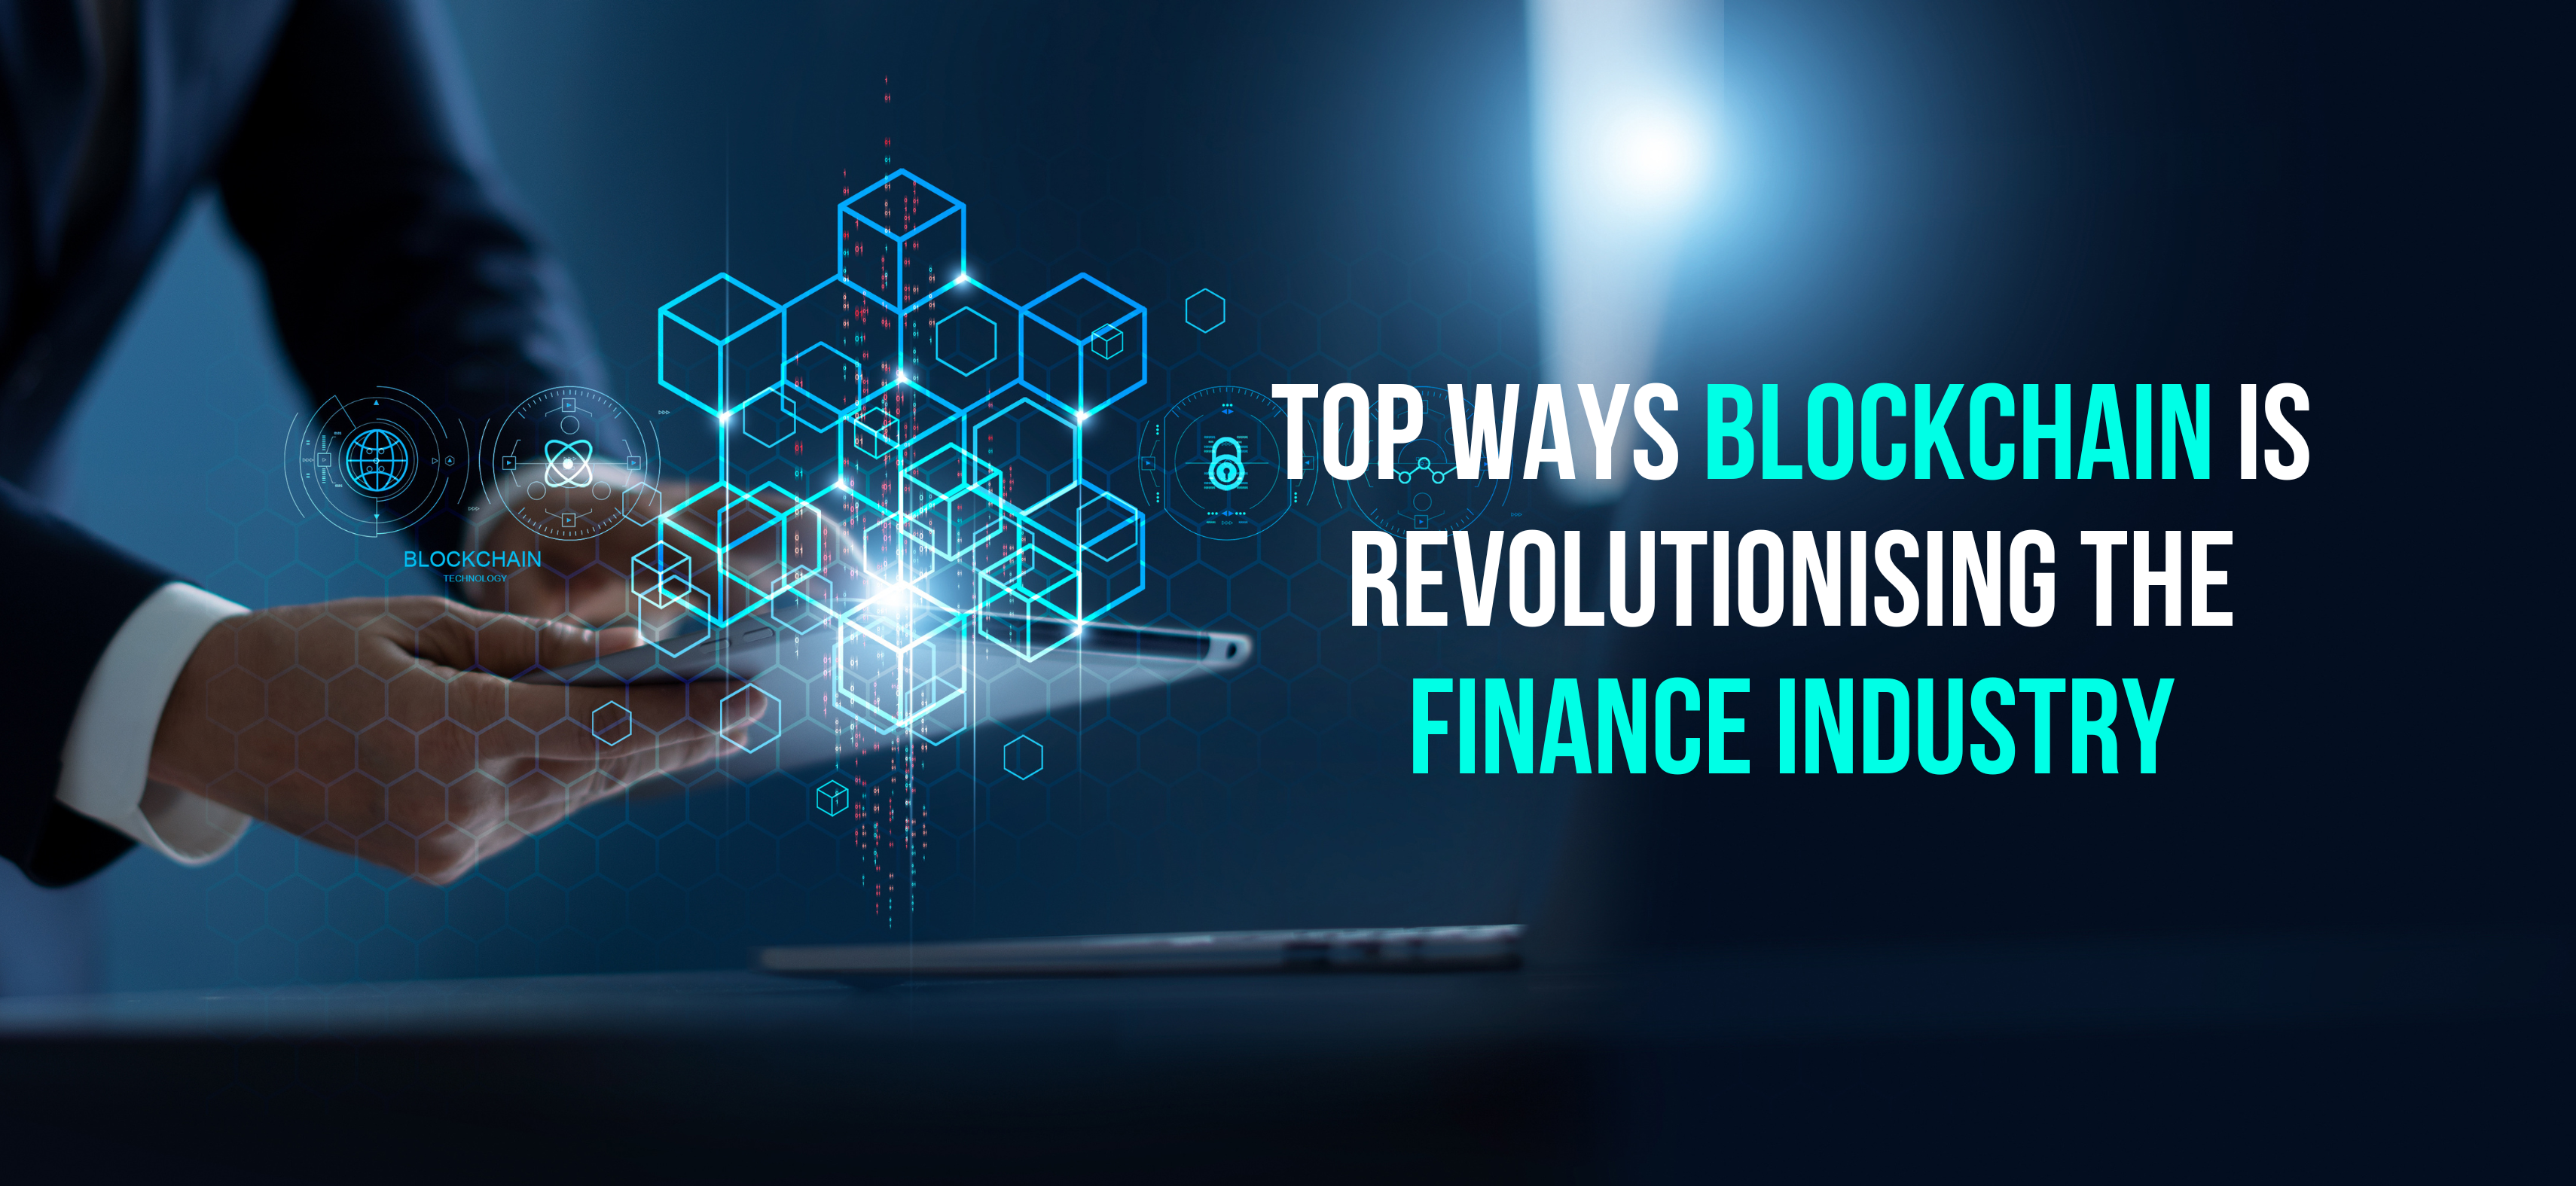 Top Ways Blockchain is Revolutionizing the Finance Industry - Internet soft